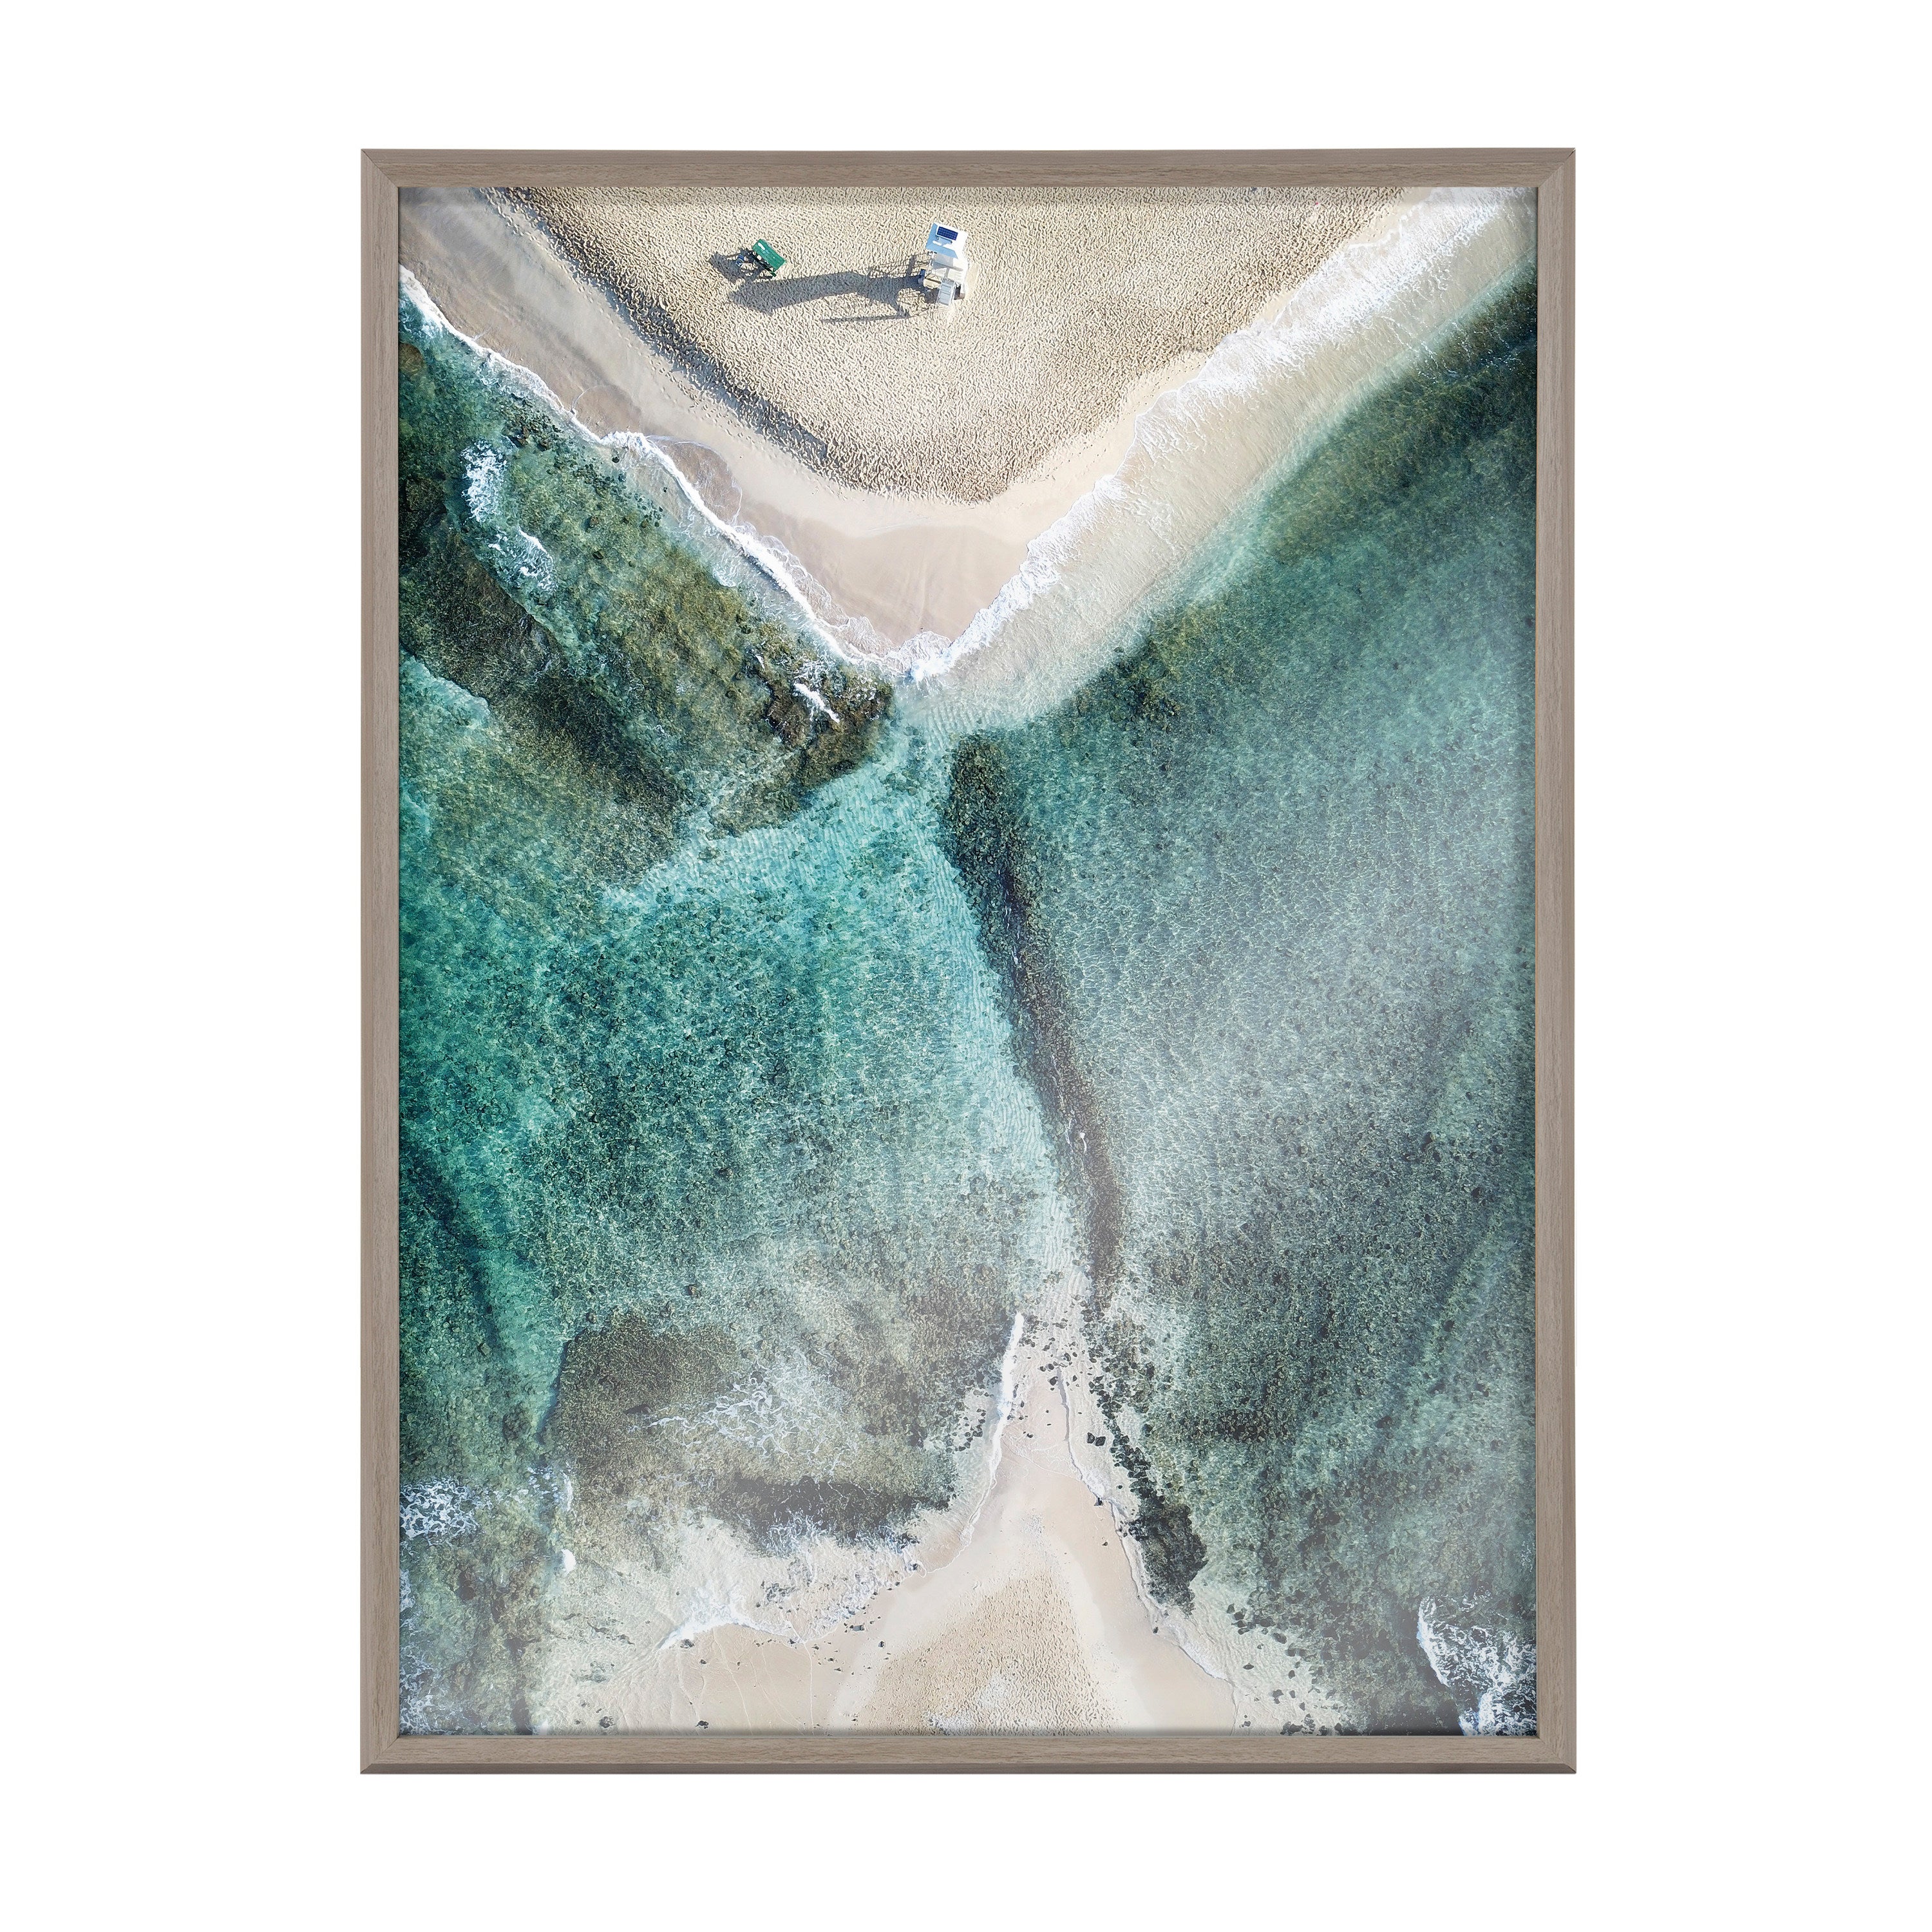 Blake Poipu Beach Framed Printed Art by Rachel Bolgov